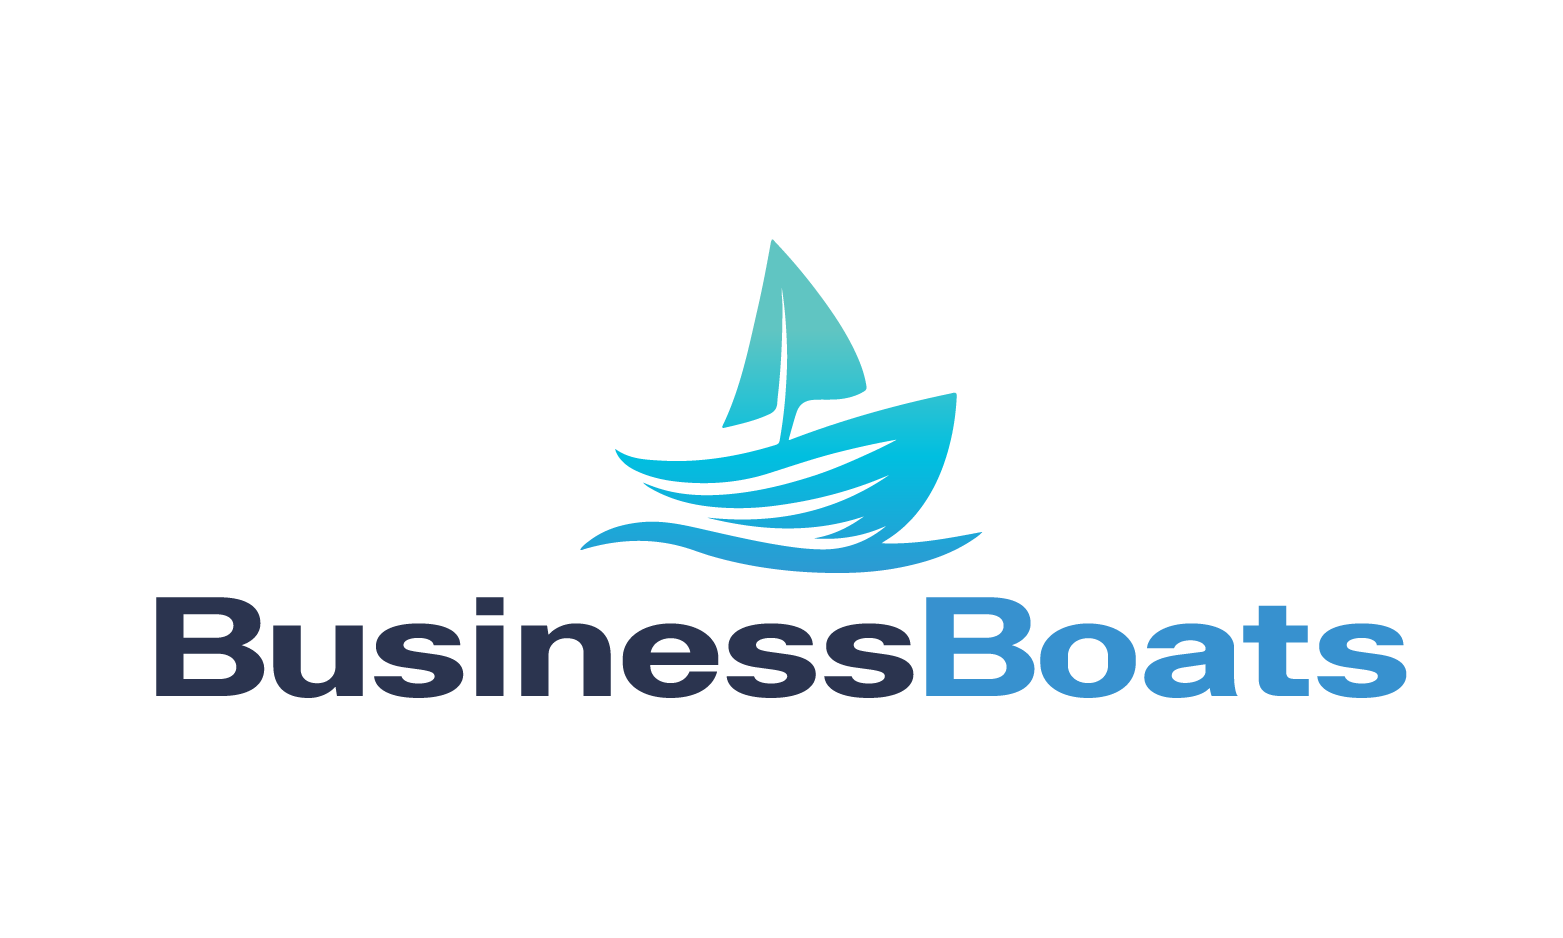 BusinessBoats.com - Creative brandable domain for sale